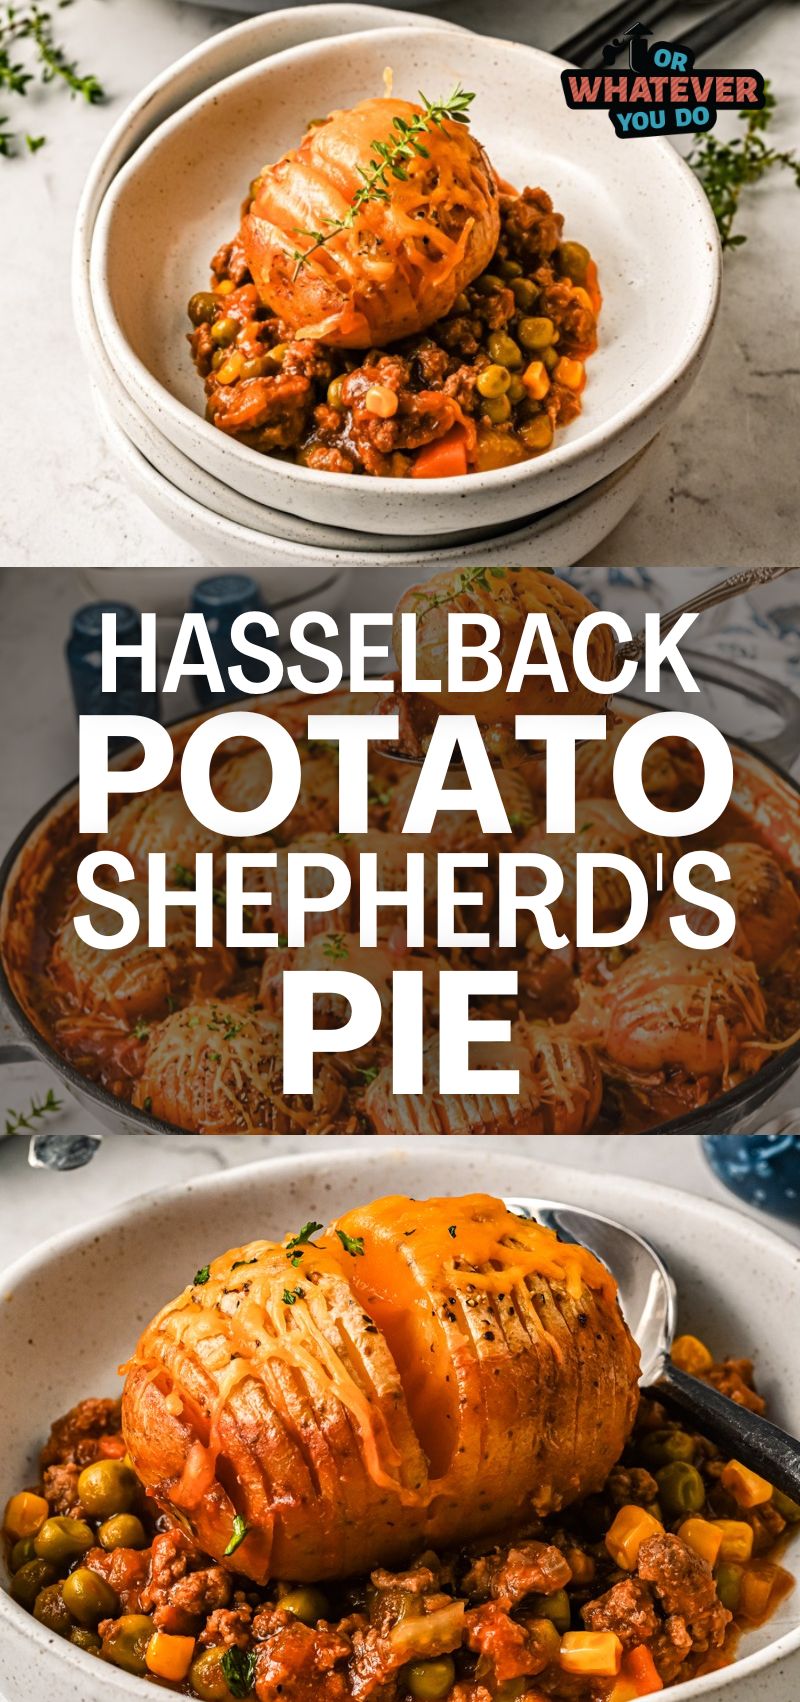 Hasselback Potato Shepherd's Pie